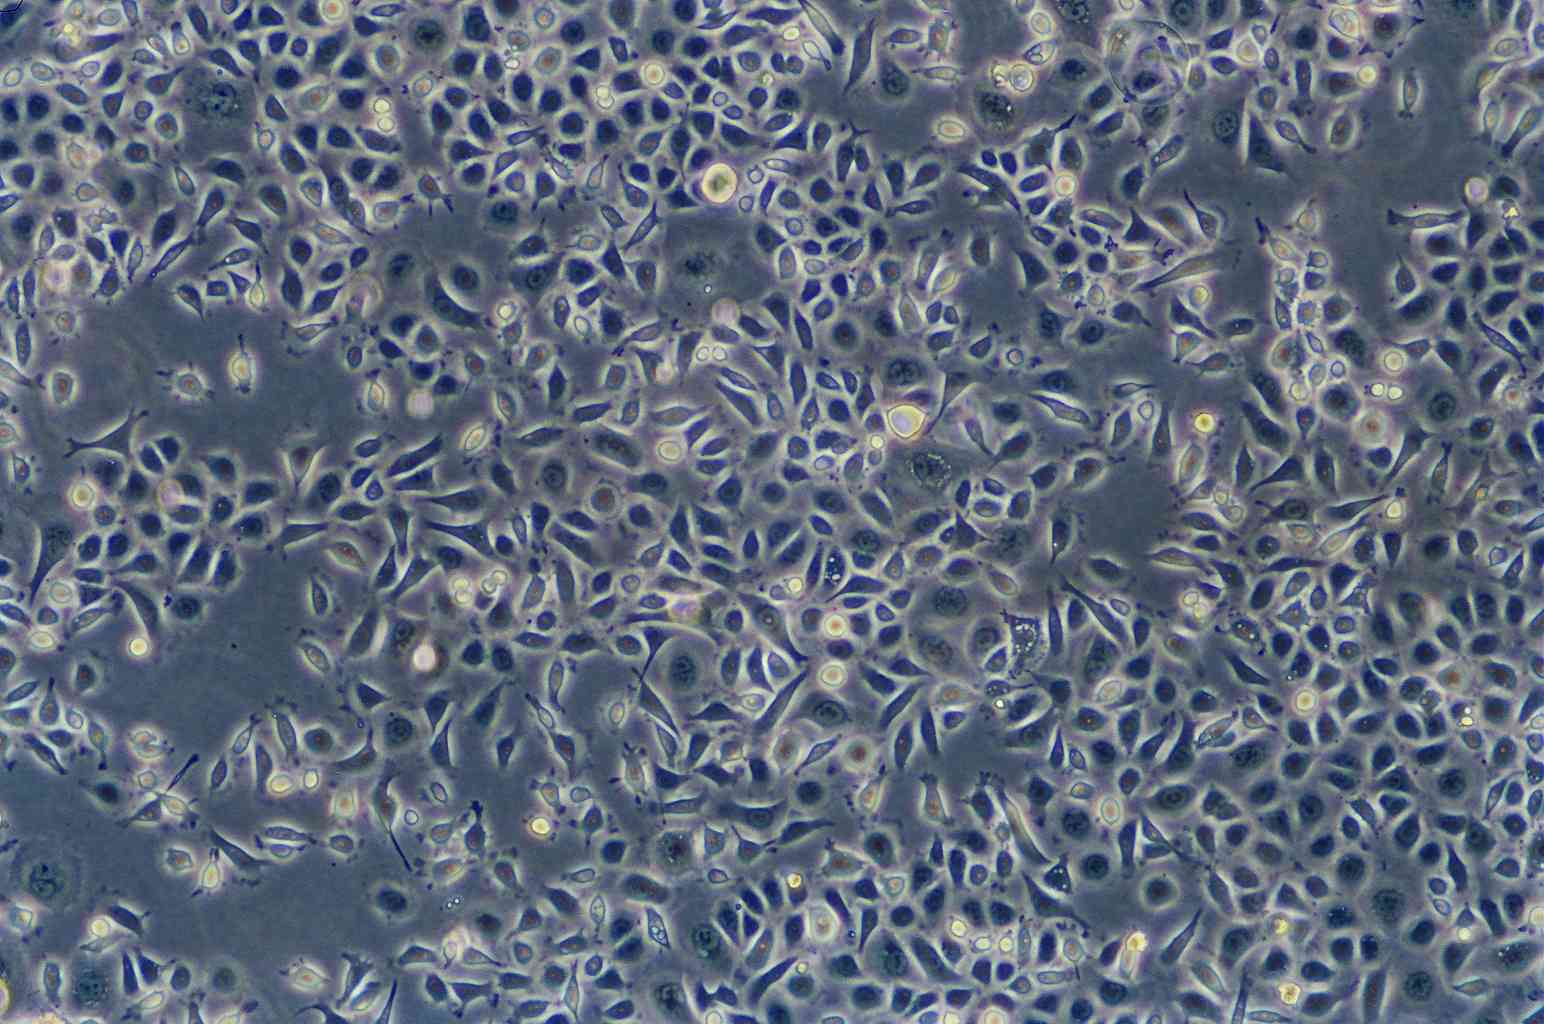 SNU-1040 Fresh Cells|人结肠癌细胞(送STR基因图谱)